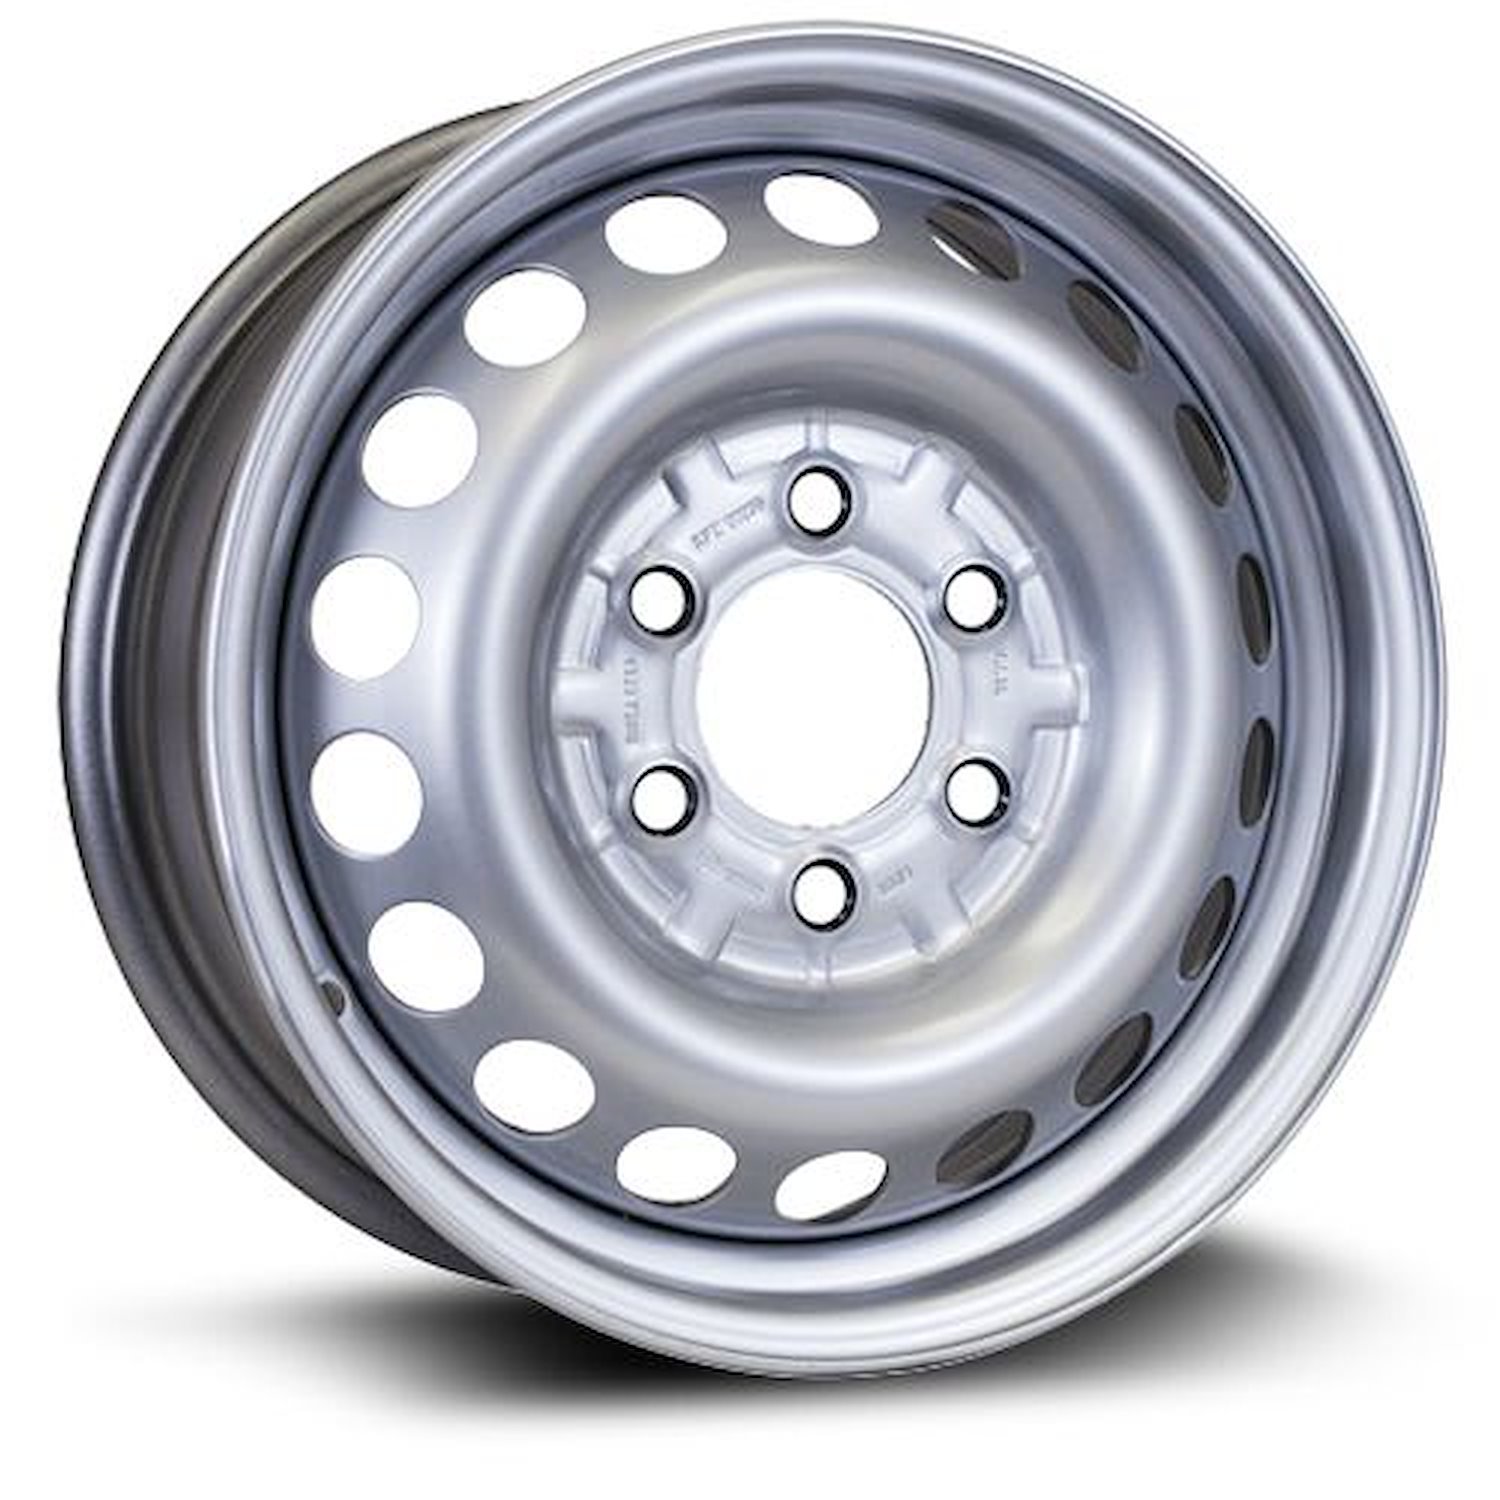 X46660 Steel Wheel [Size: 16" x 6.50"] Grey Finish